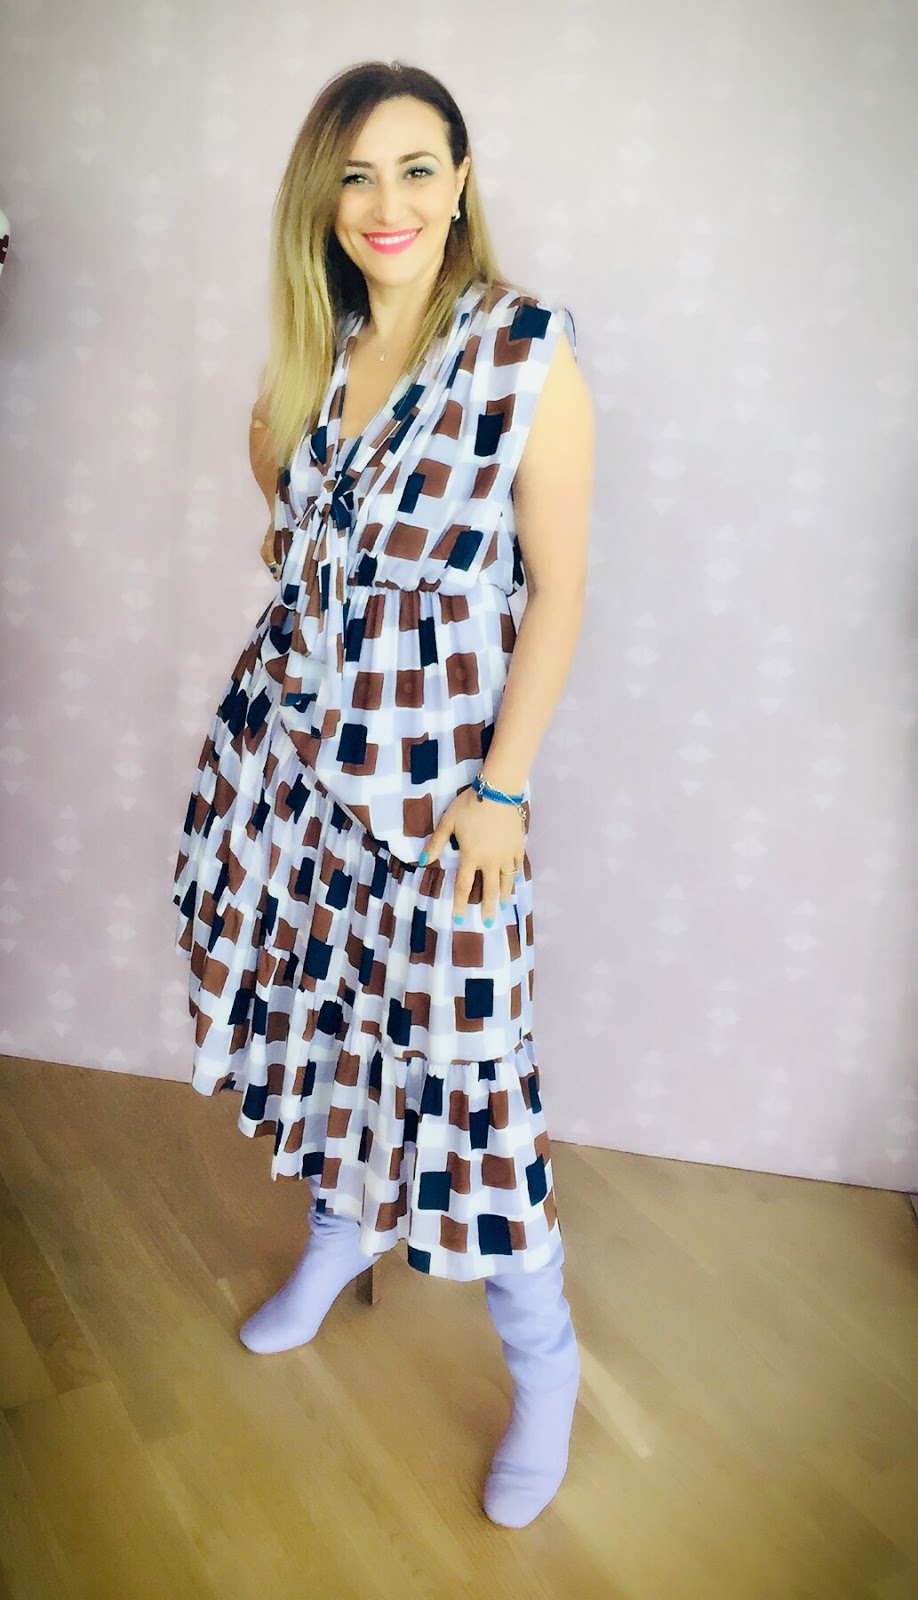 Kate Spade Lavender dress and boots | Dubai Fashion Blog